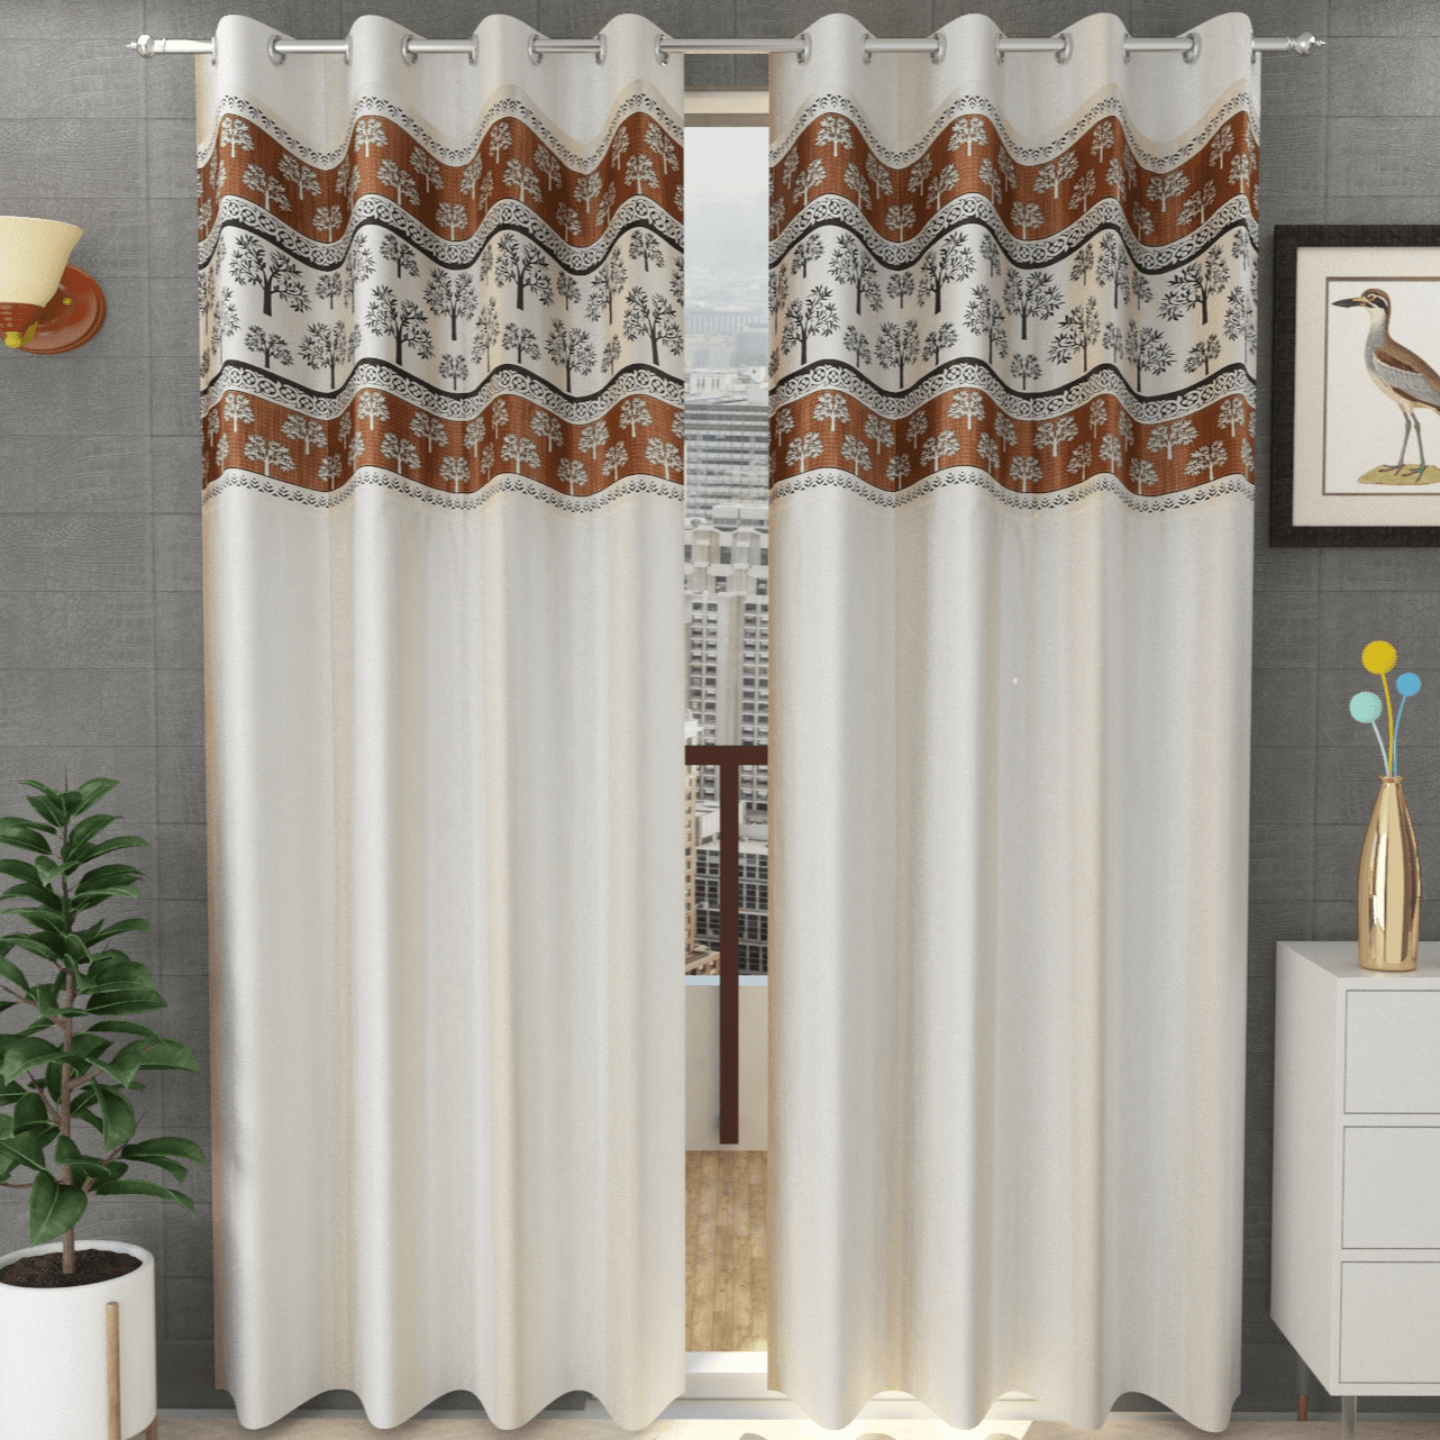 Handtex Home Tree design Patchwork curtain for door 7 feet set of 2pc Cream color